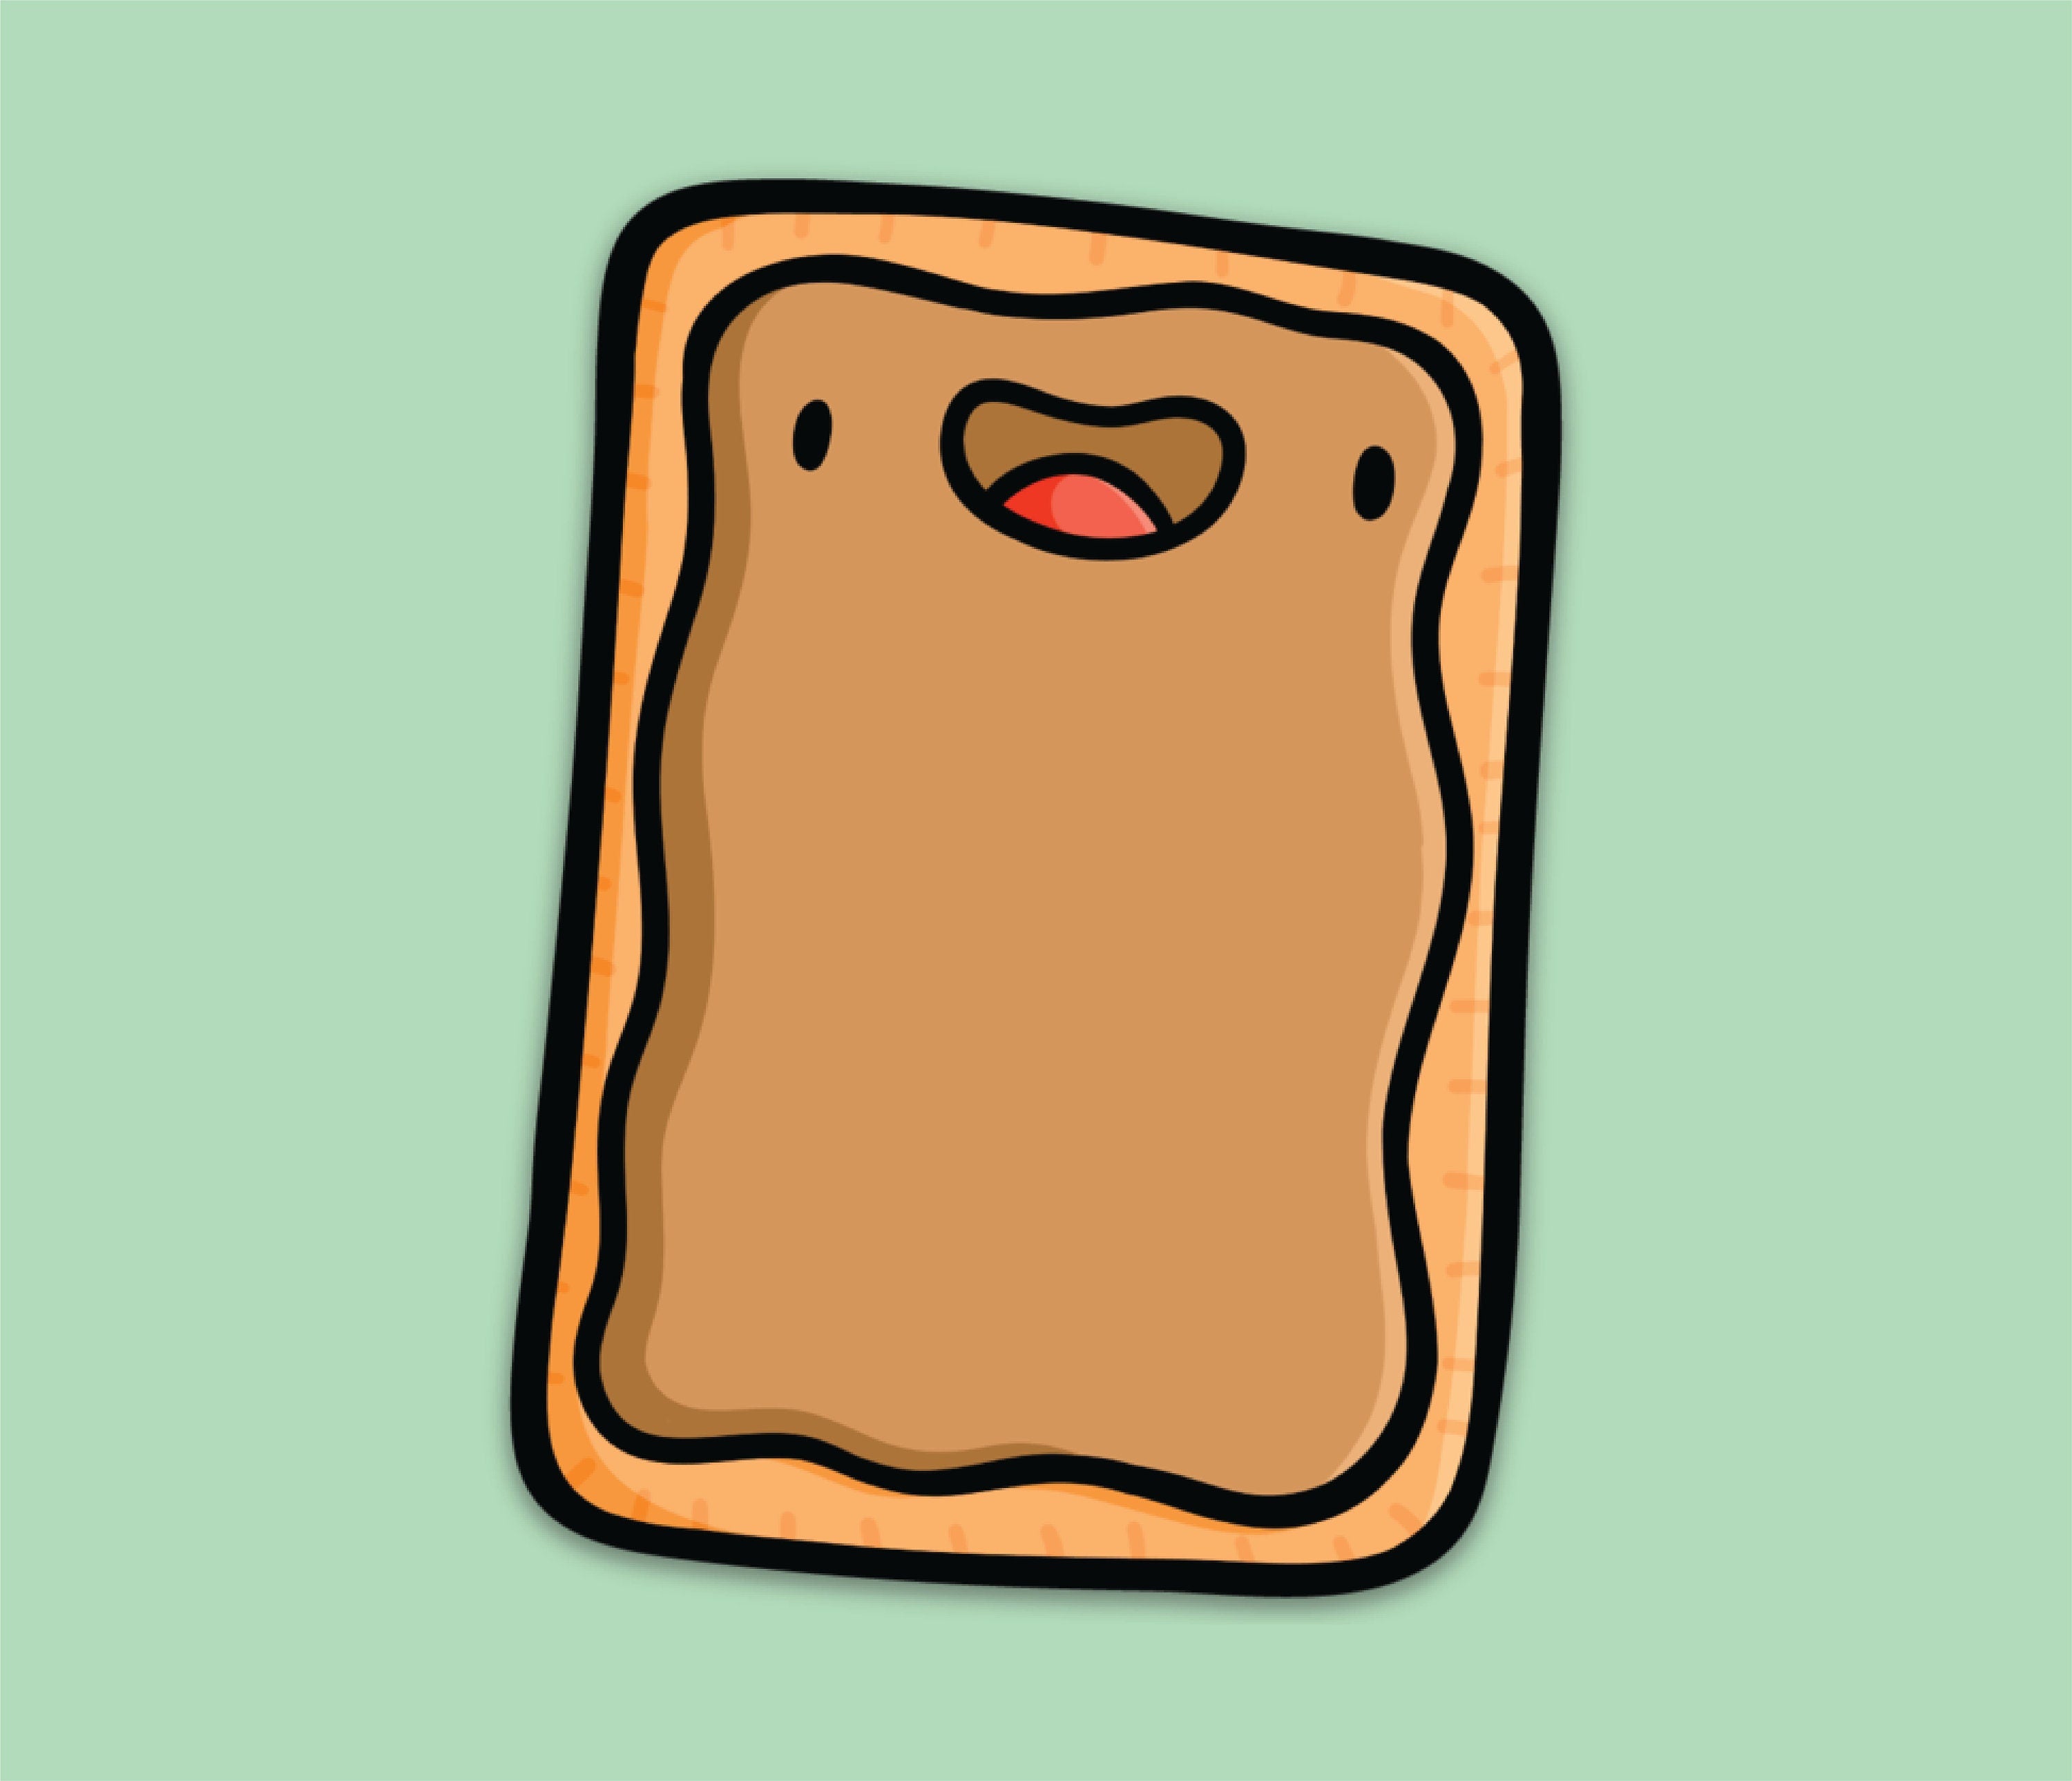 Toaster Pastry Sticker (Brown Sugar)